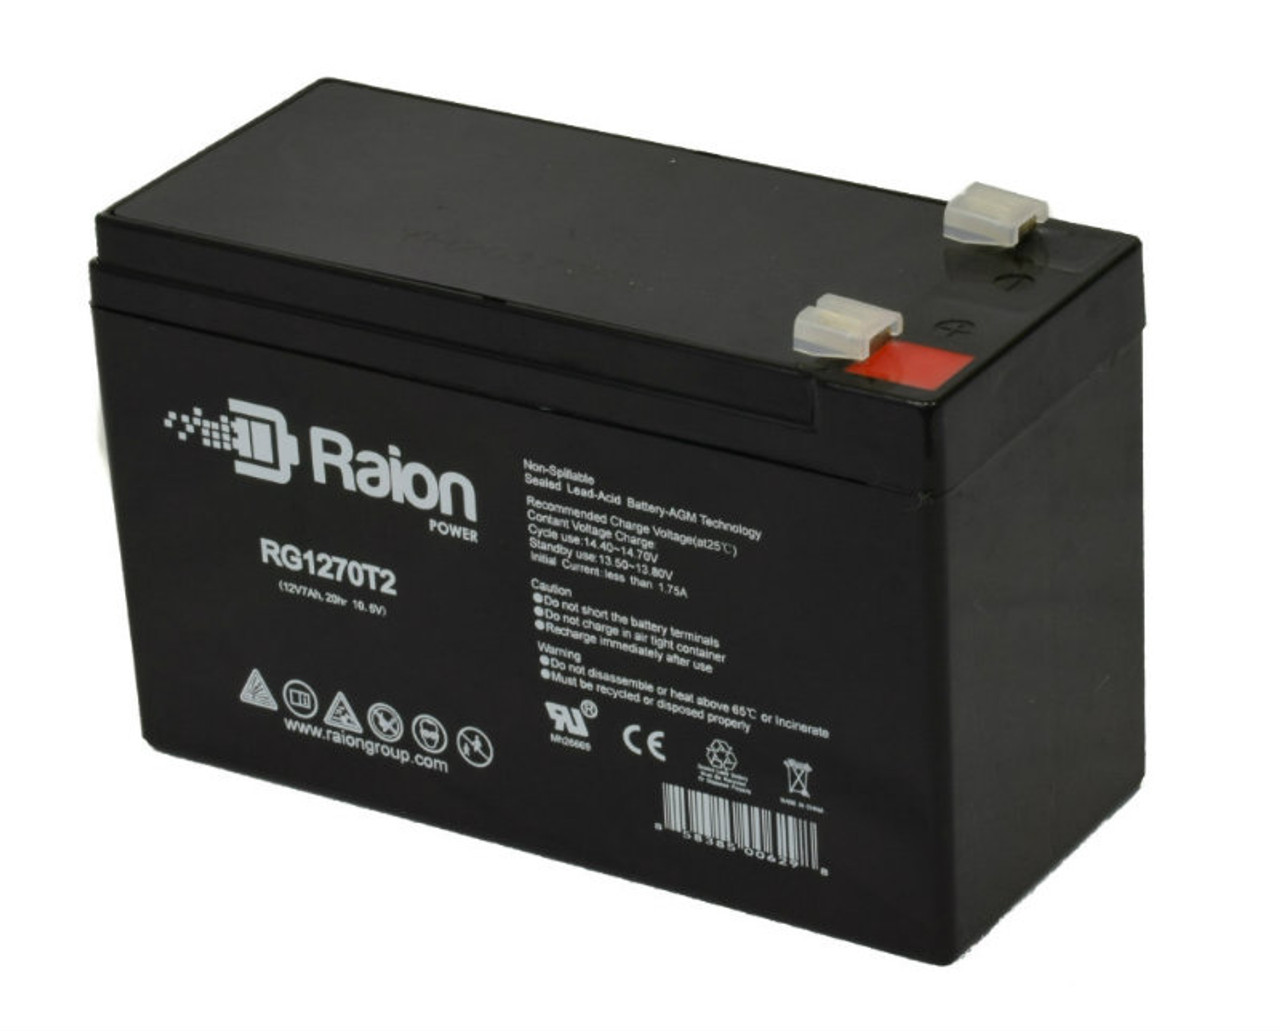 Raion Power RG1270T2 12V 7Ah Lead Acid Battery for Tao Motor Fox 500